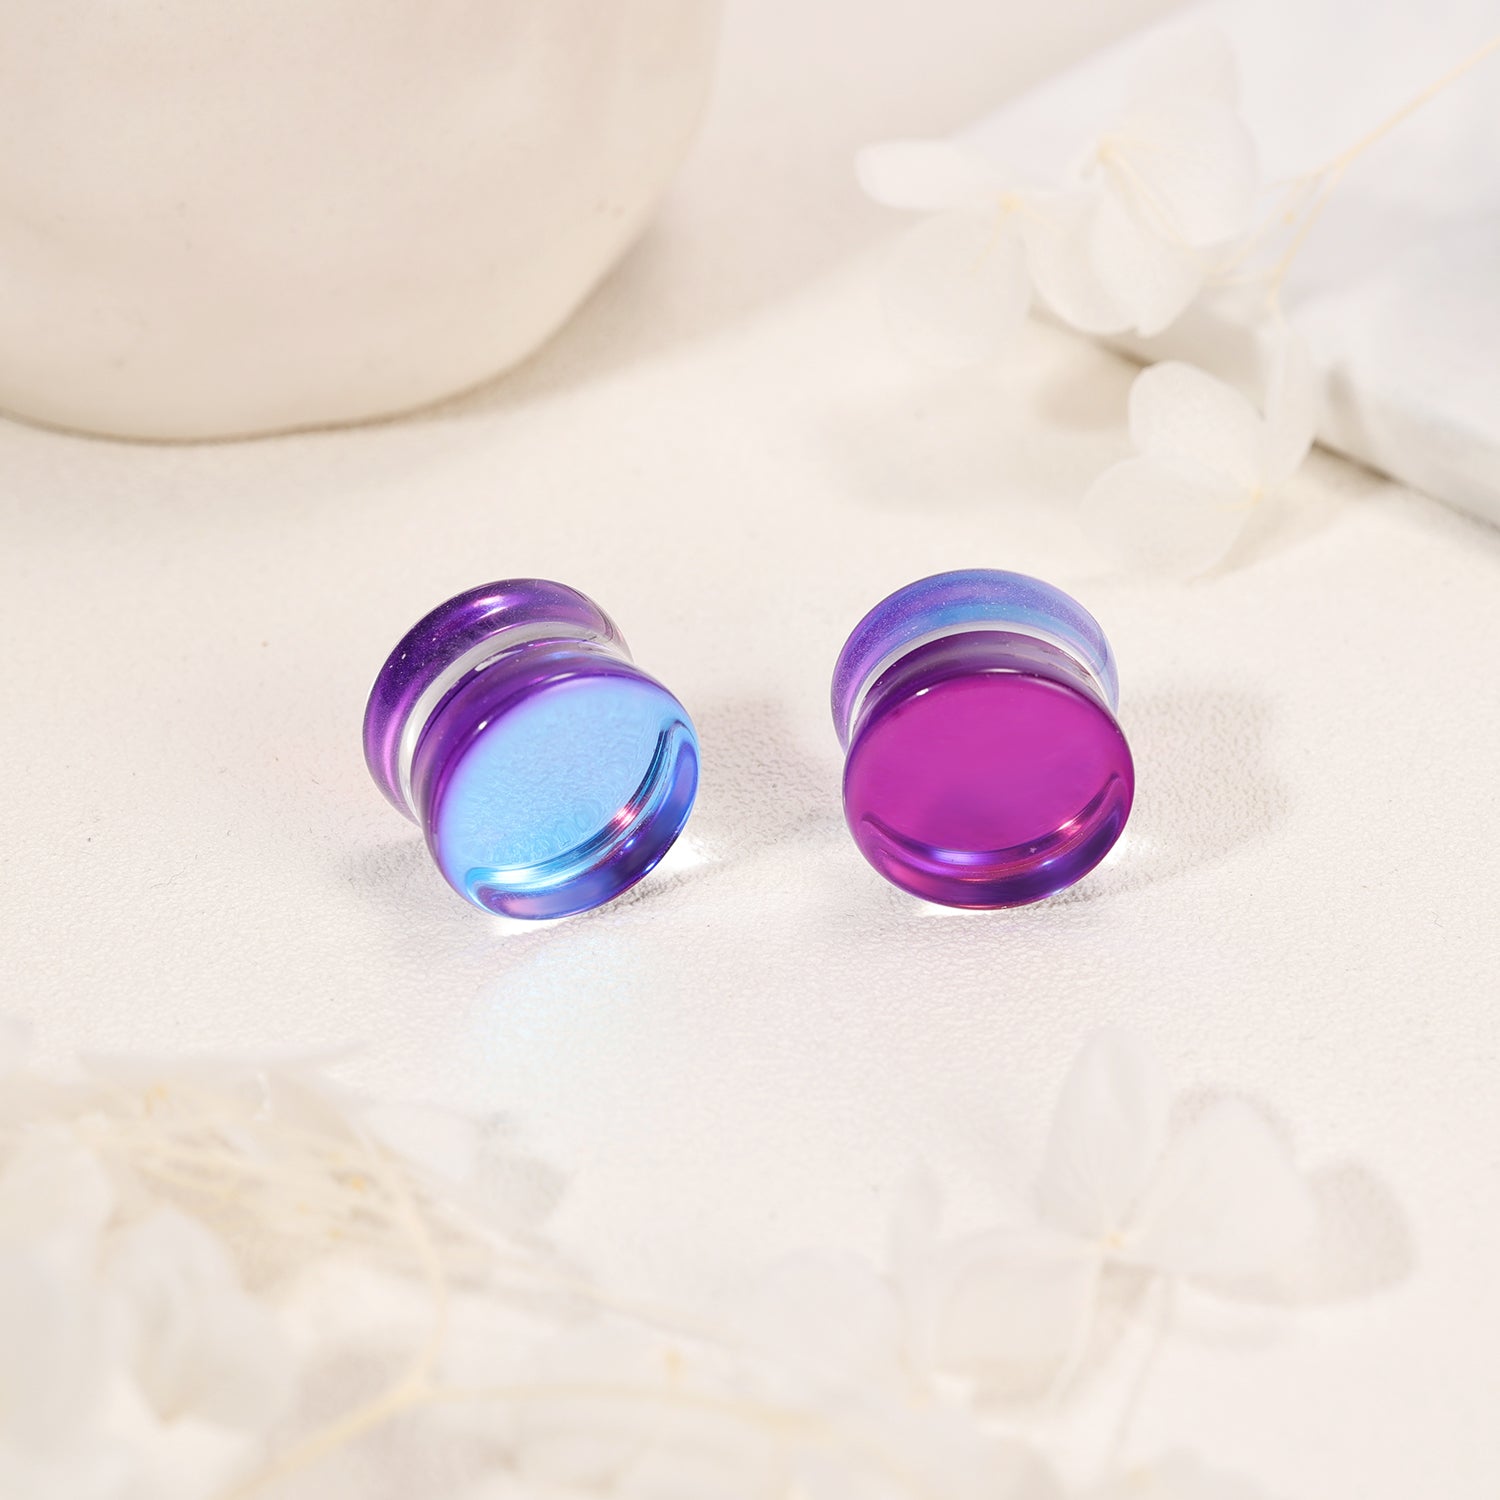 1 Pair 6-14mm Ear Plug Tunnel Purple Glass Ear Expanders Double Flare Ear Gauges